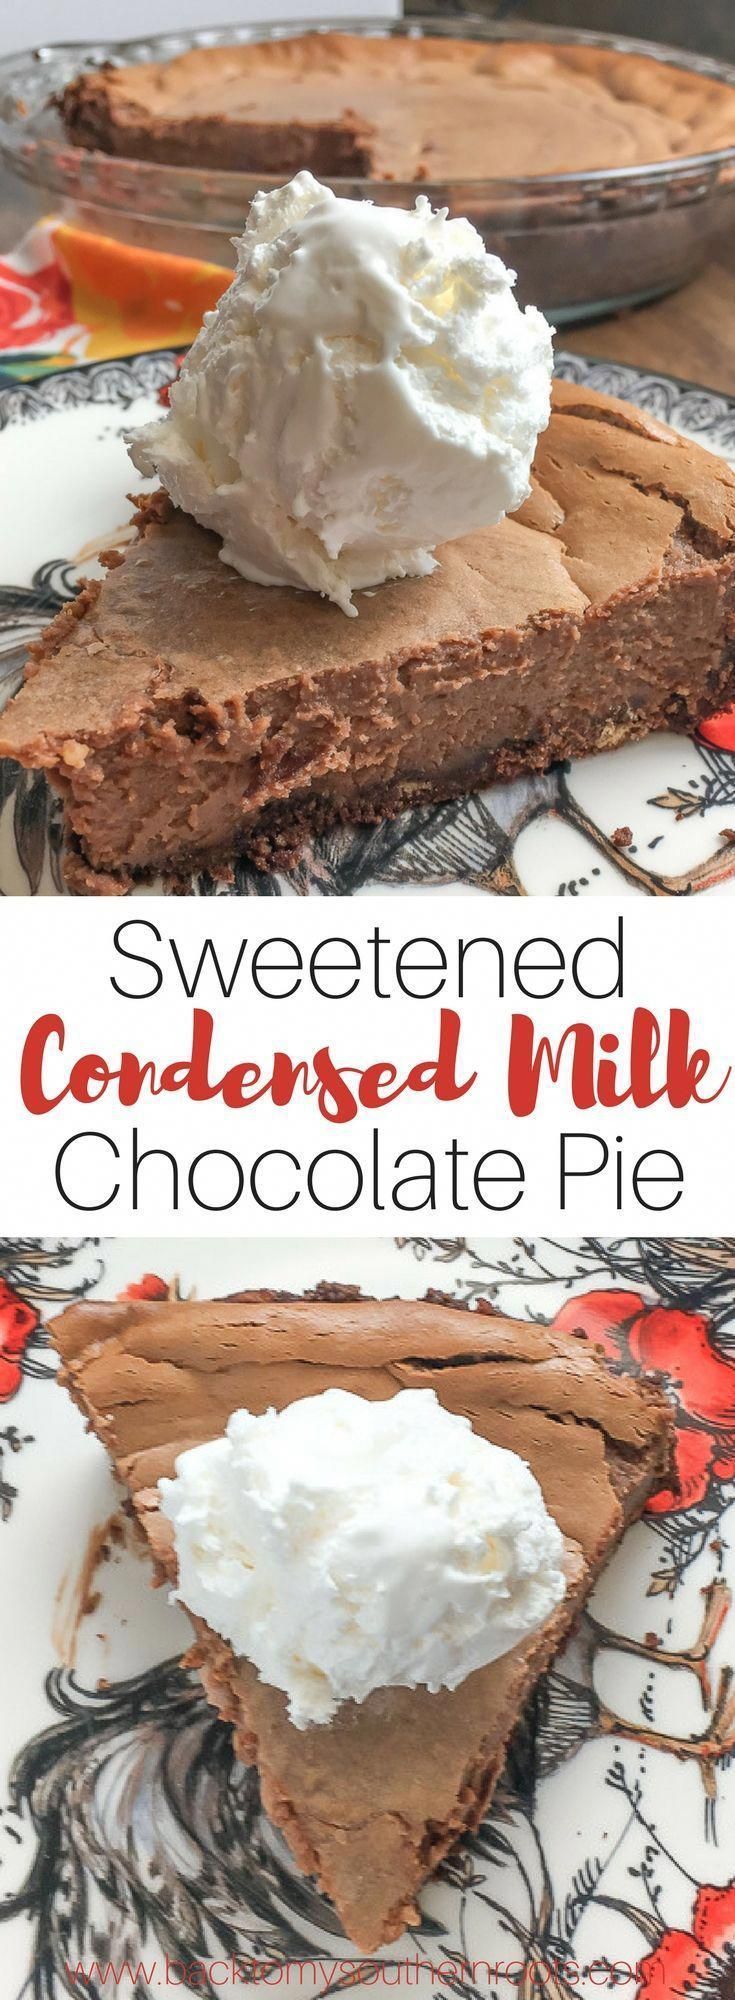 Sweetened Condensed Milk Chocolate Pie -   19 thanksgiving desserts easy chocolate ideas